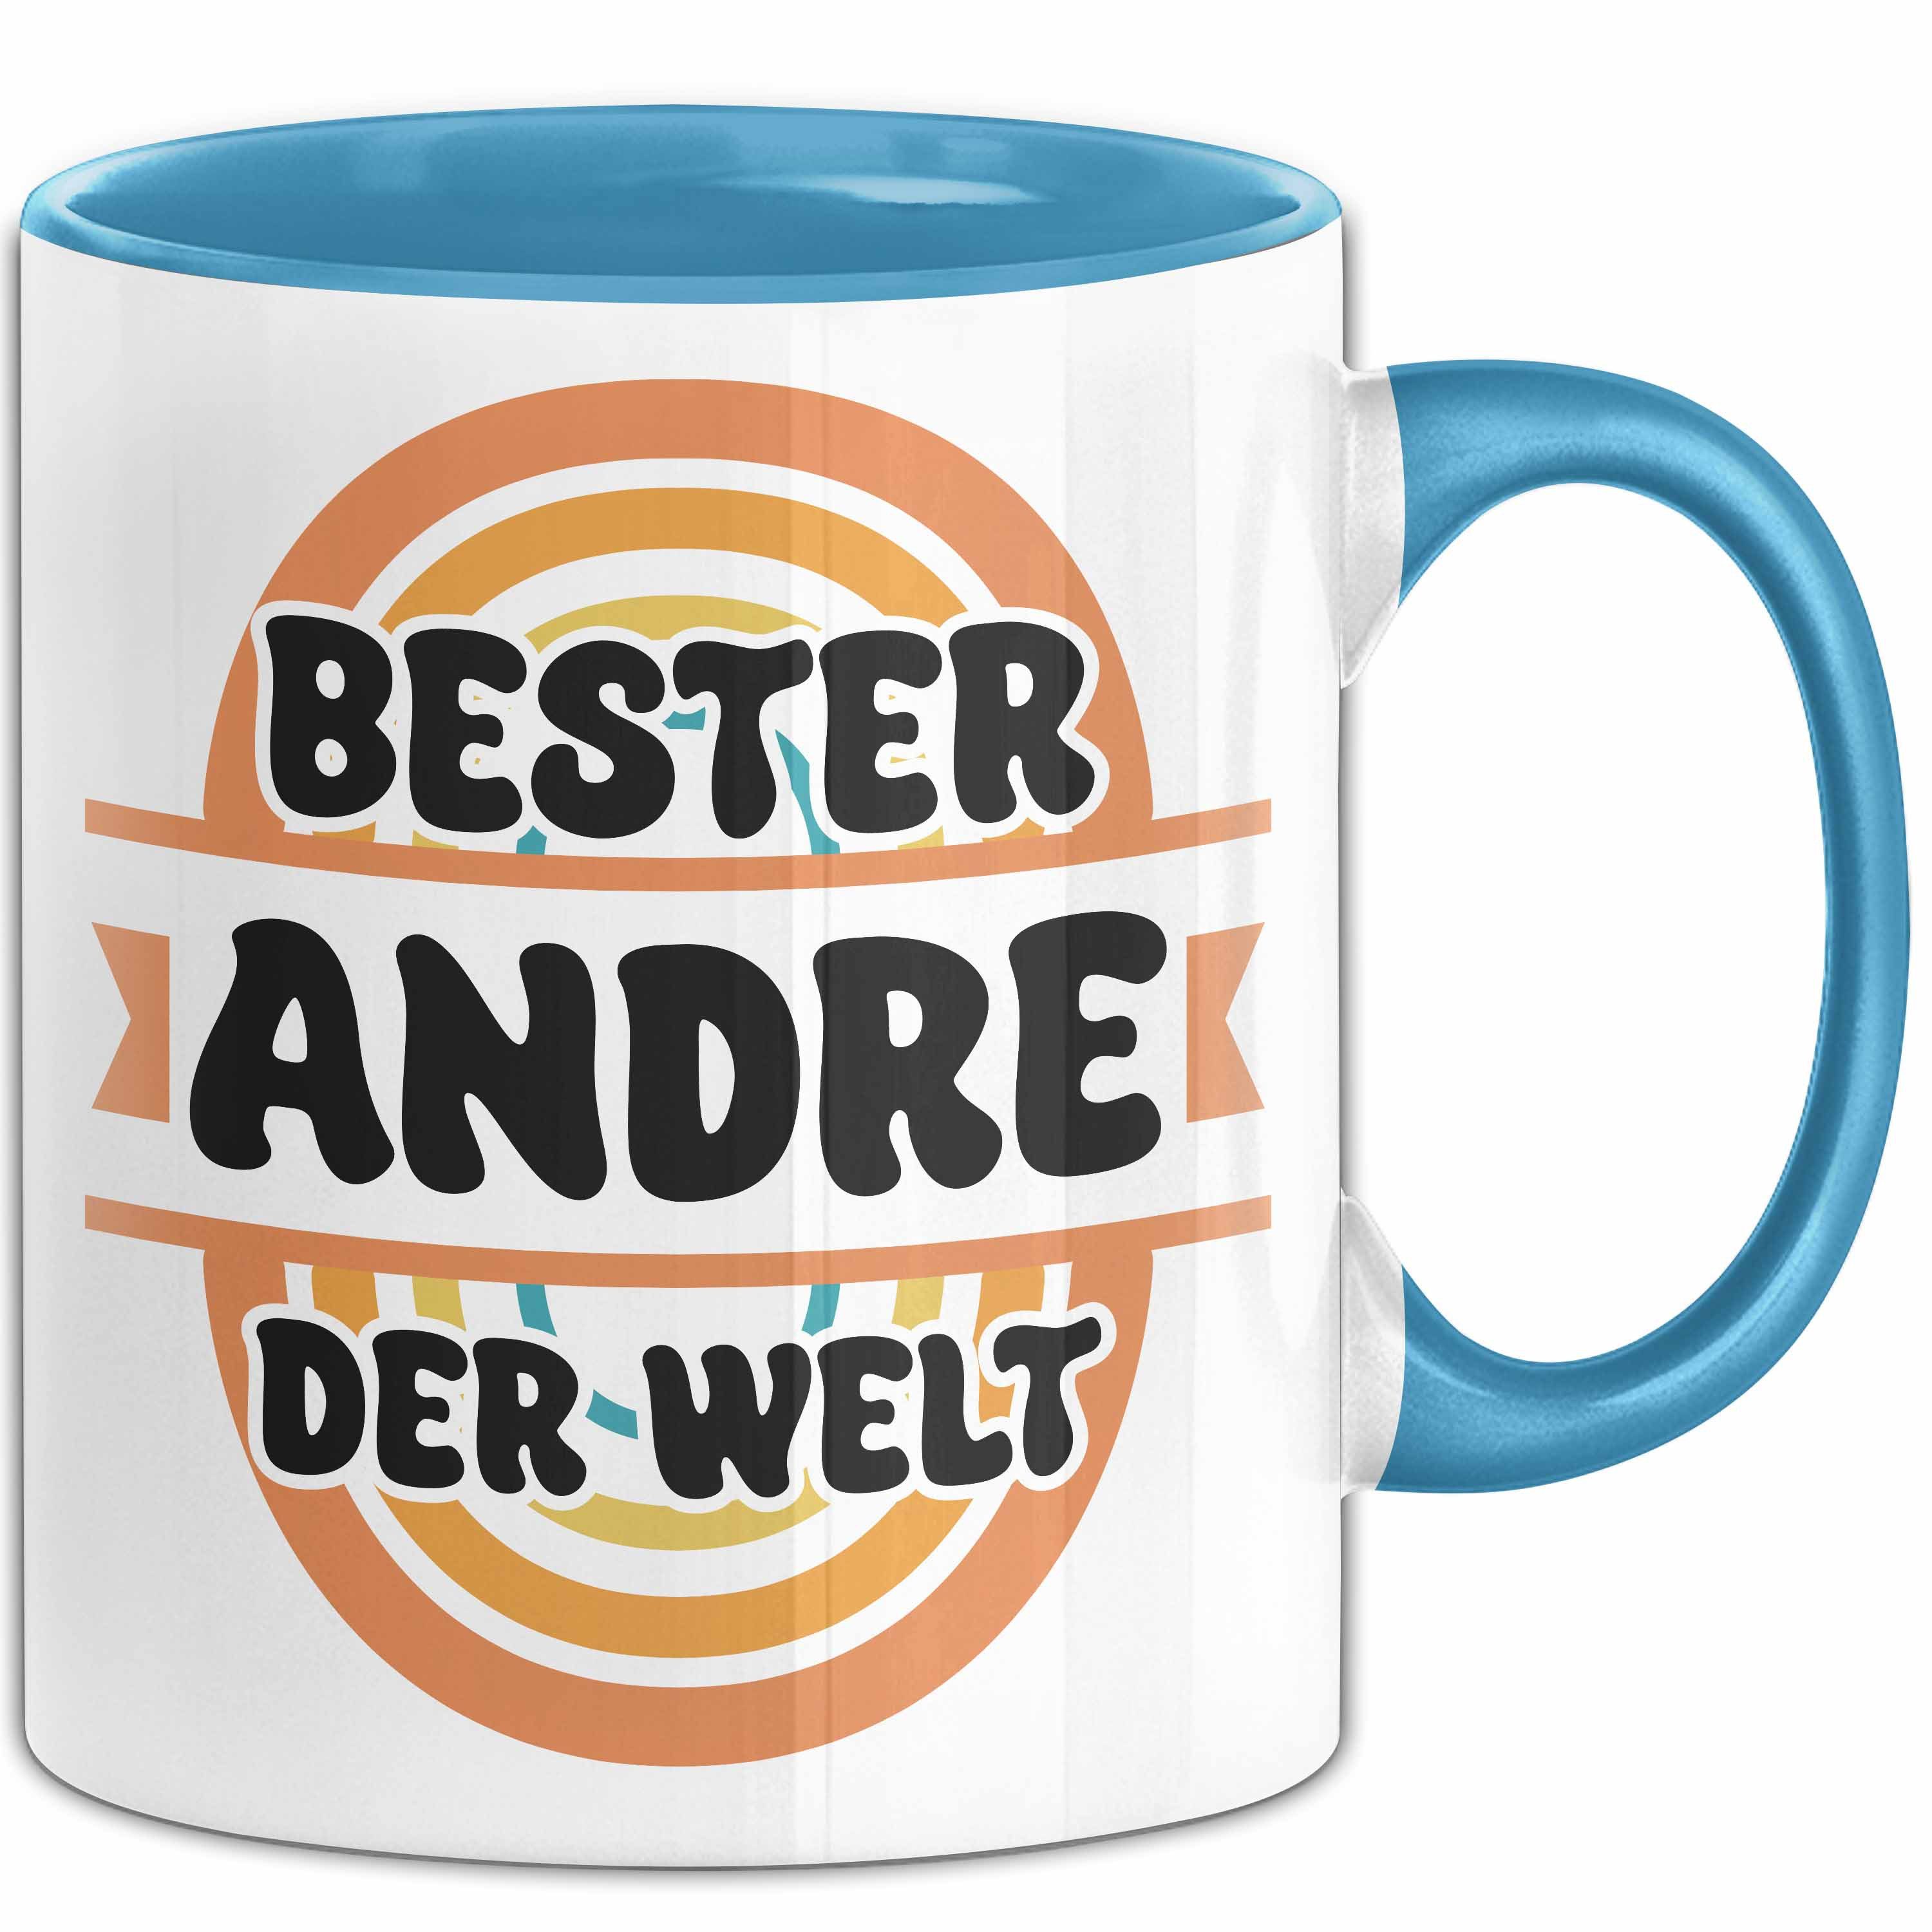 Trendation Tasse Andre Tasse Geschenk Name Bester Andre Der Welt Kaffee-Becher